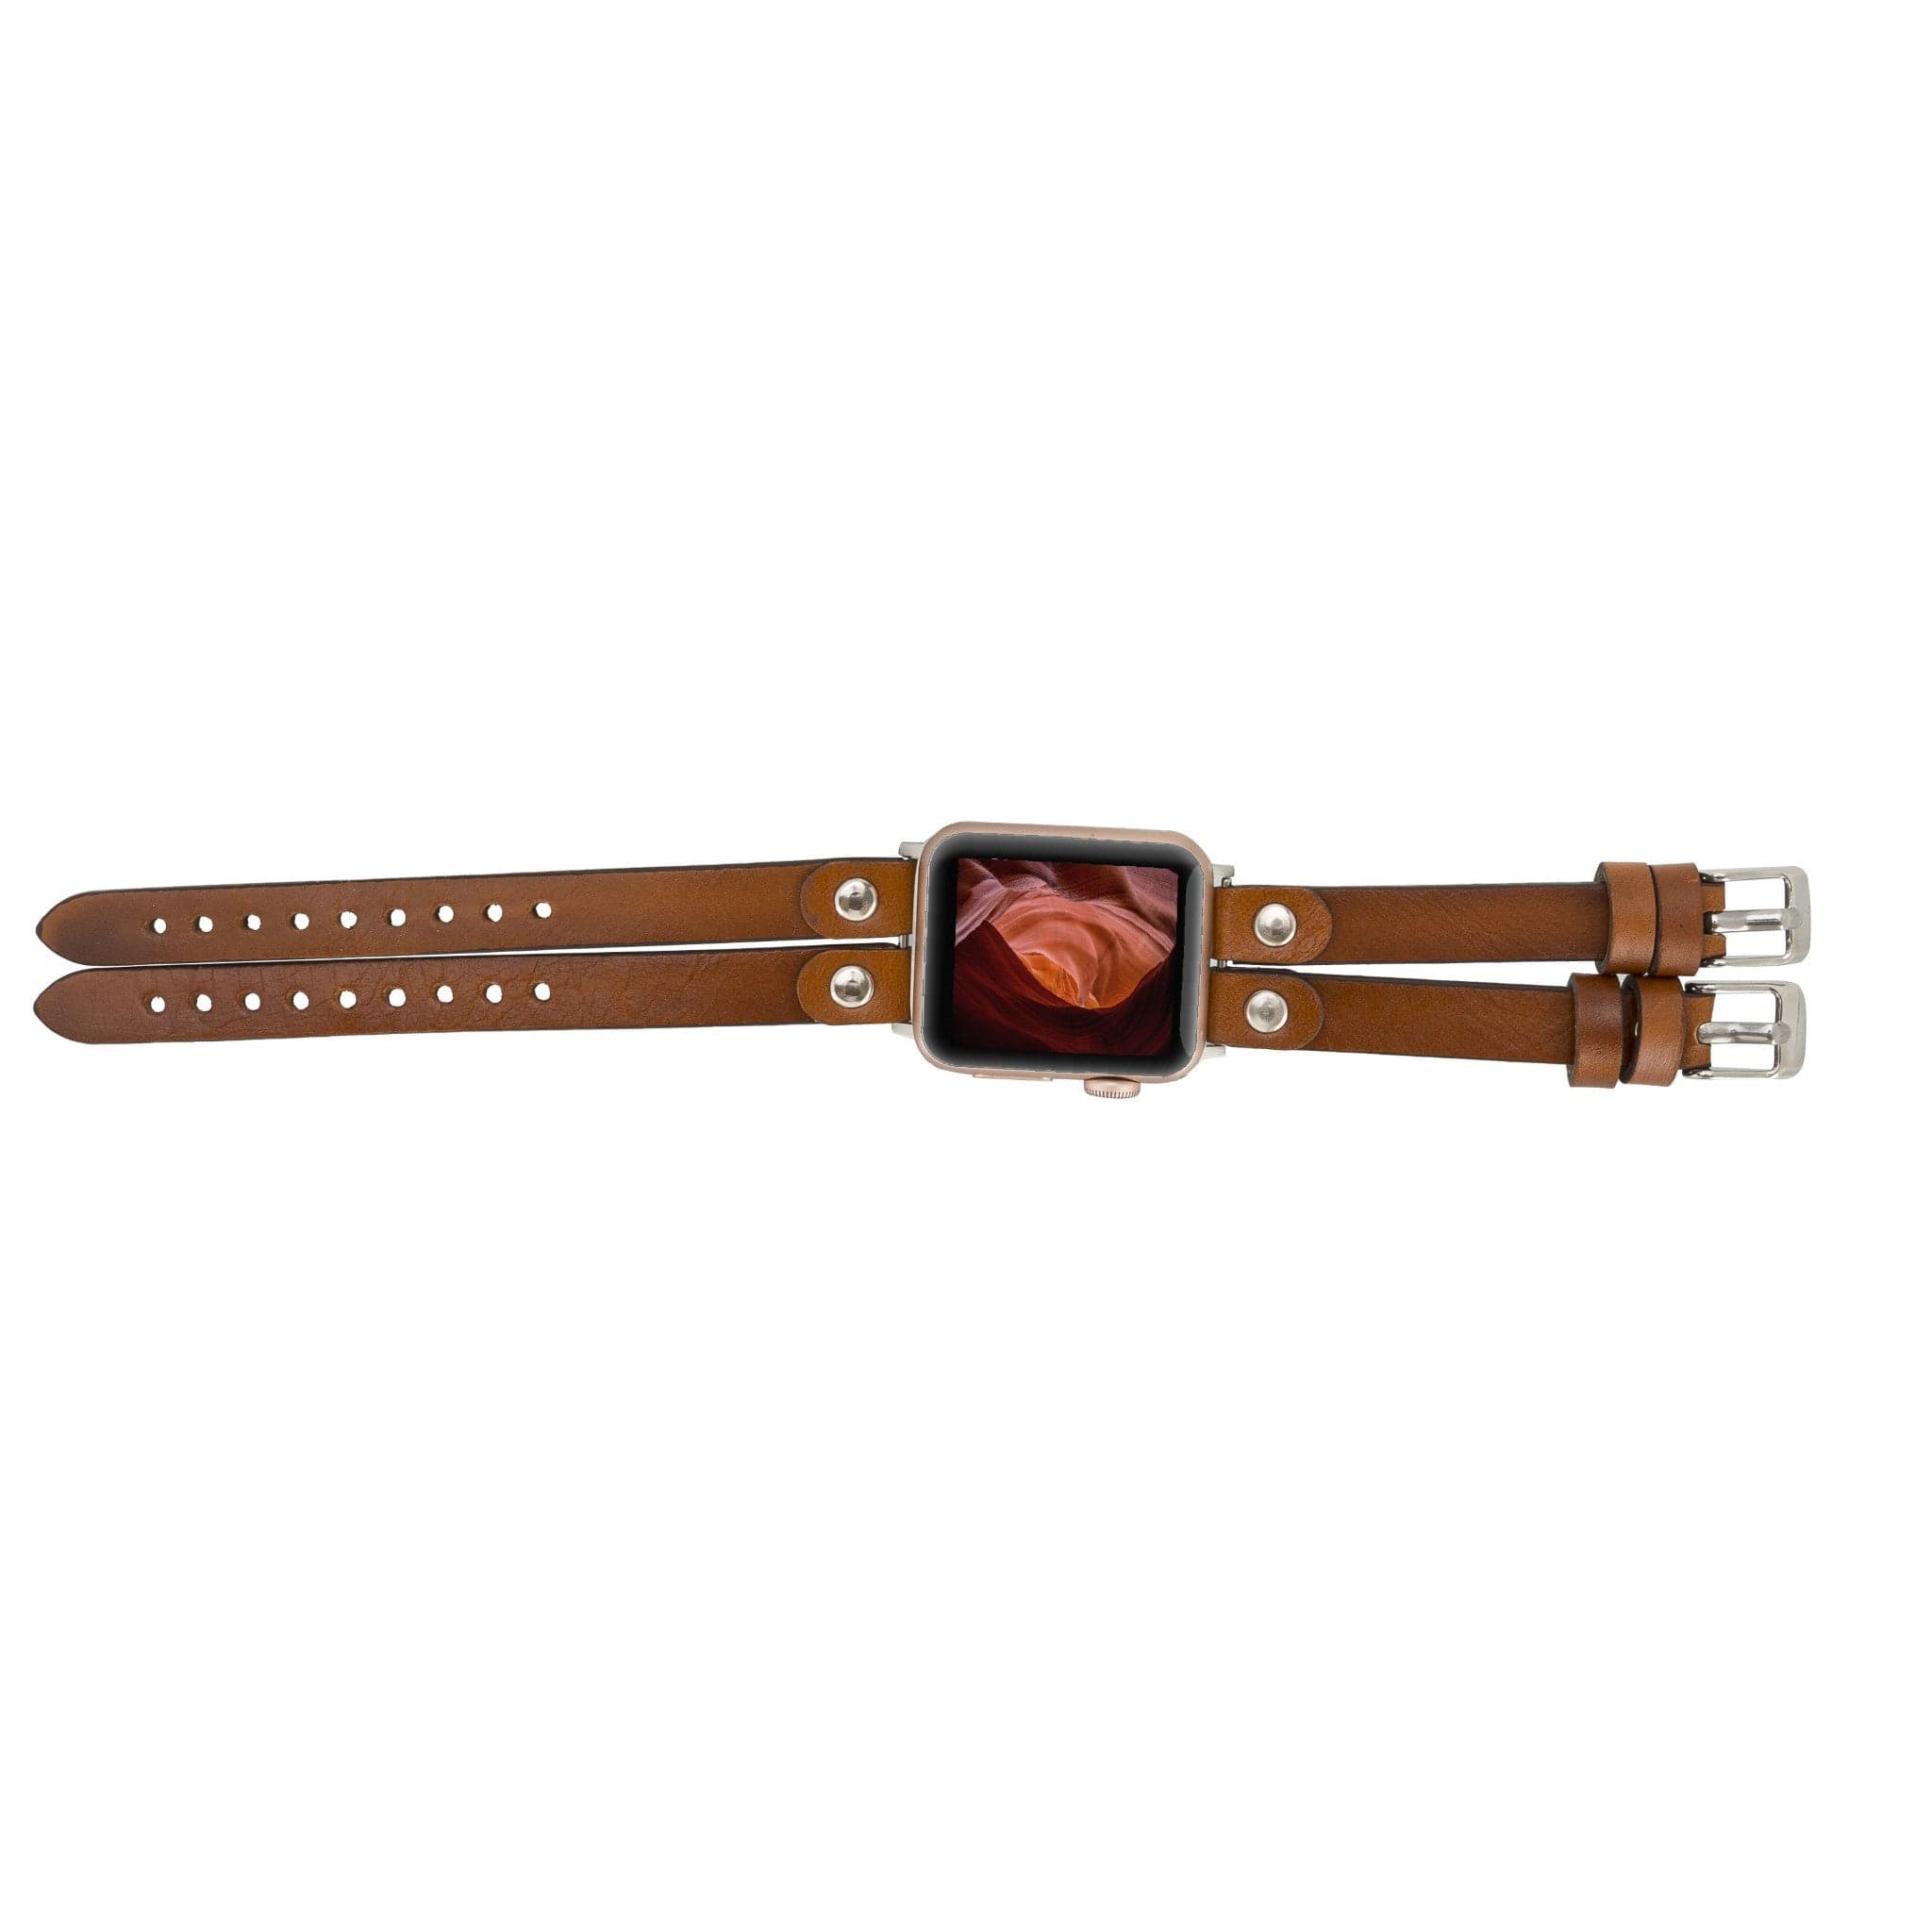 Durham Ely Apple Watch Leather Straps Bouletta